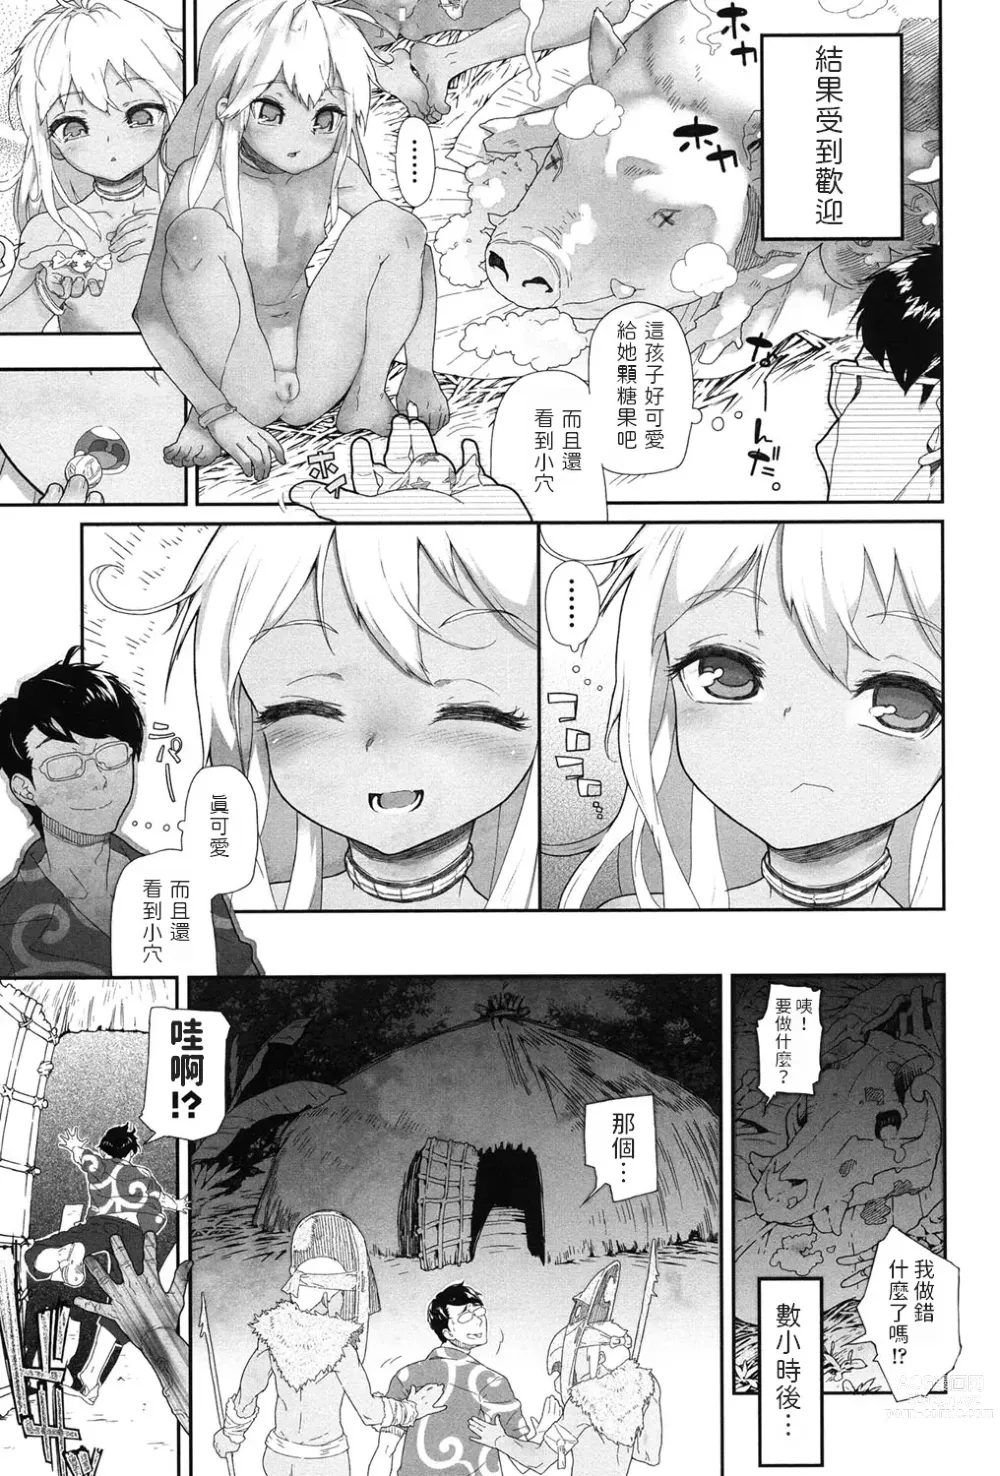 Page 5 of manga Tasatsu Tour